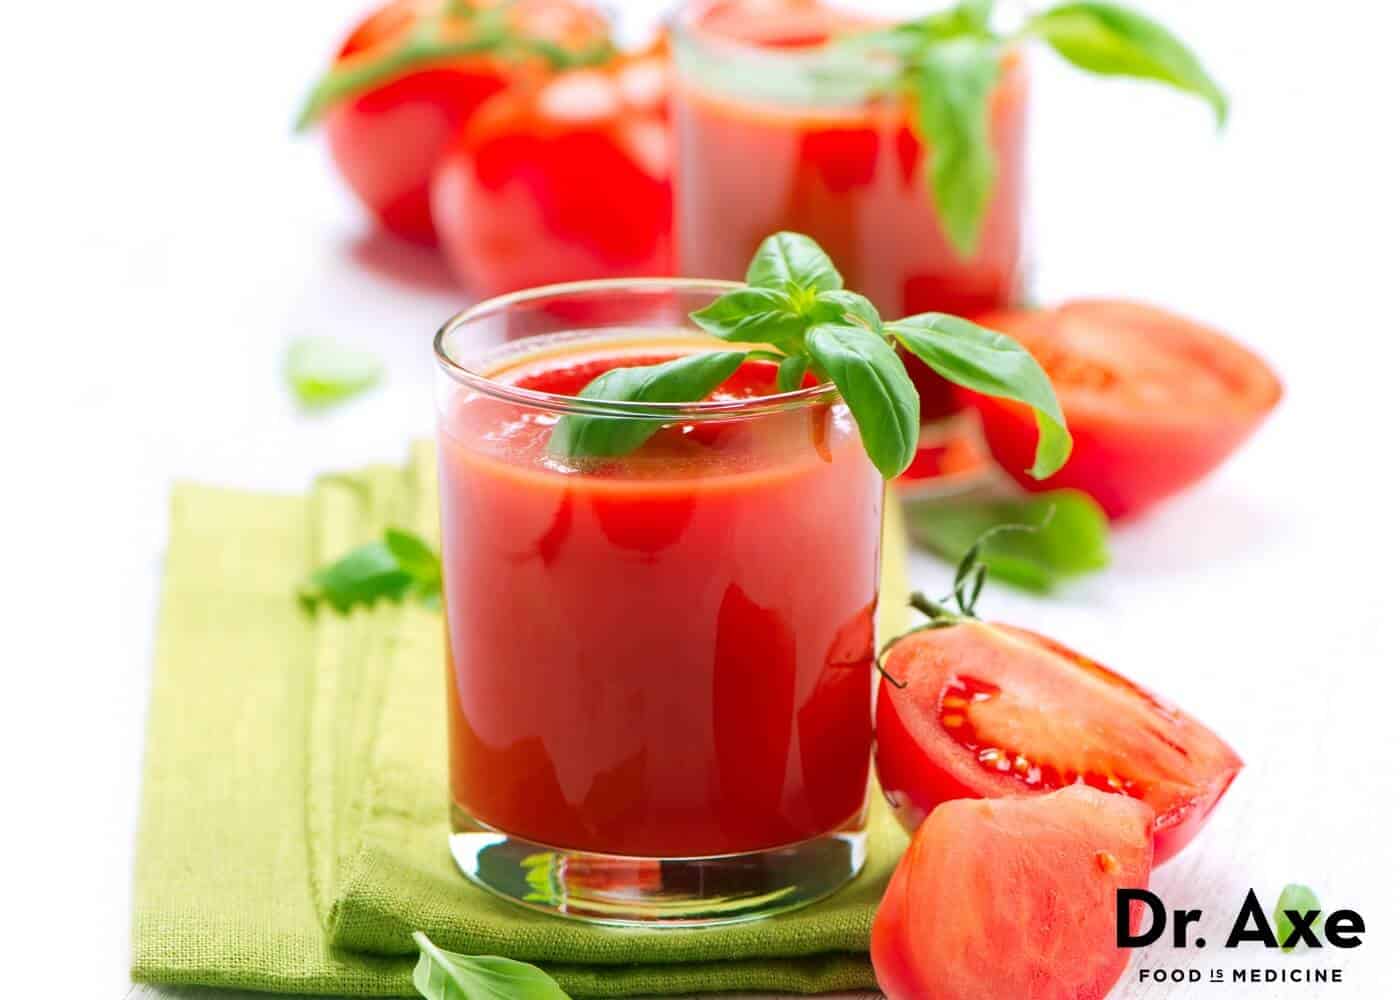 Tomato basil juice